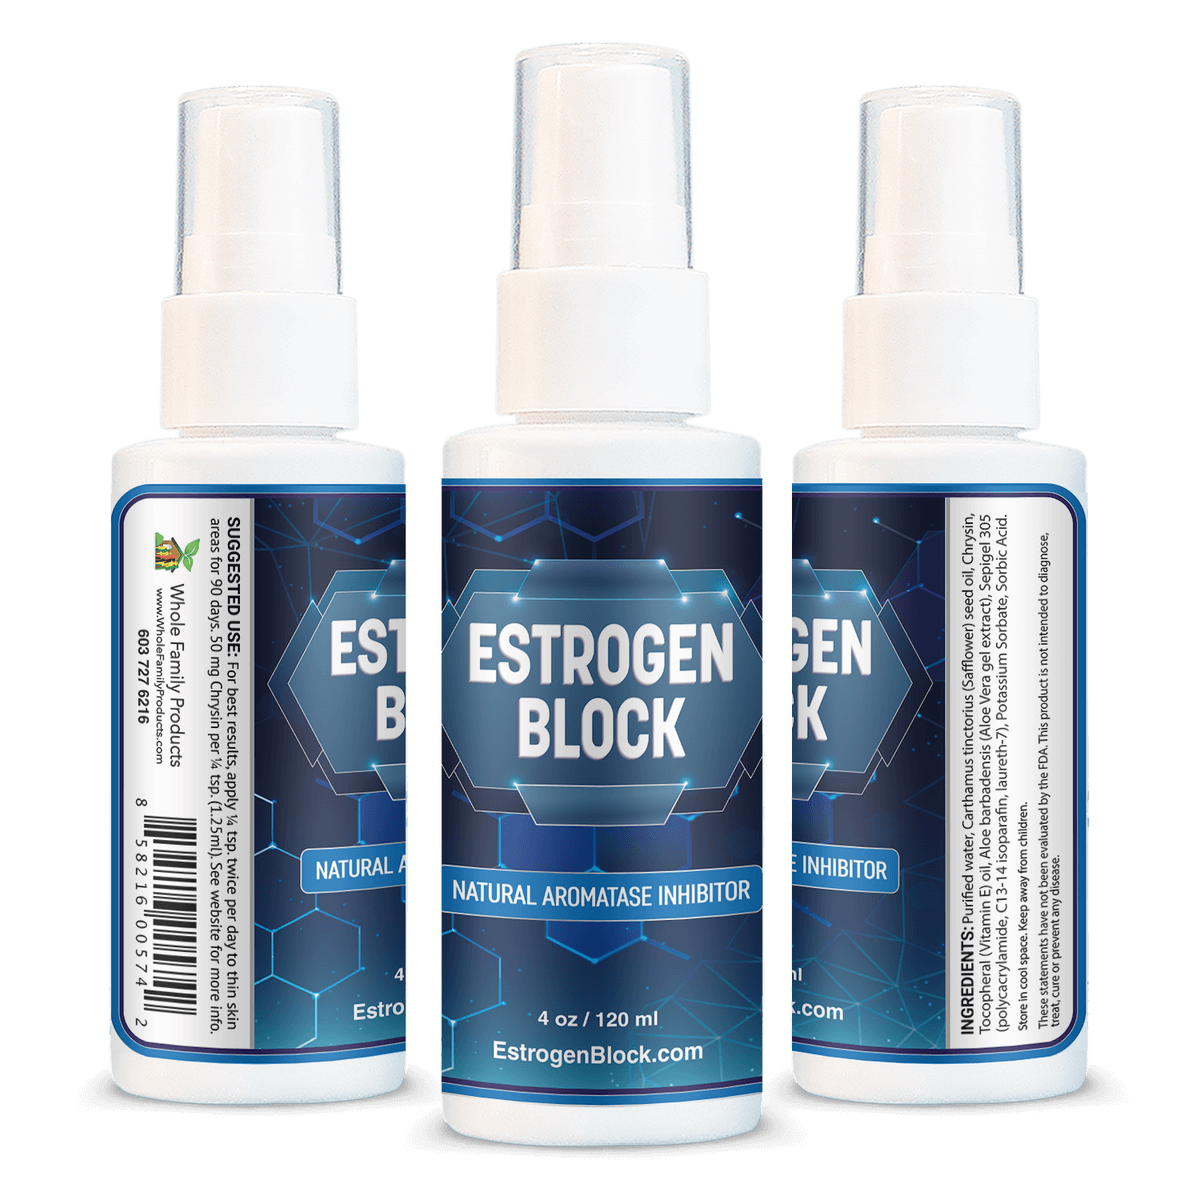 Estrogen Block Helps Balance Estradiol